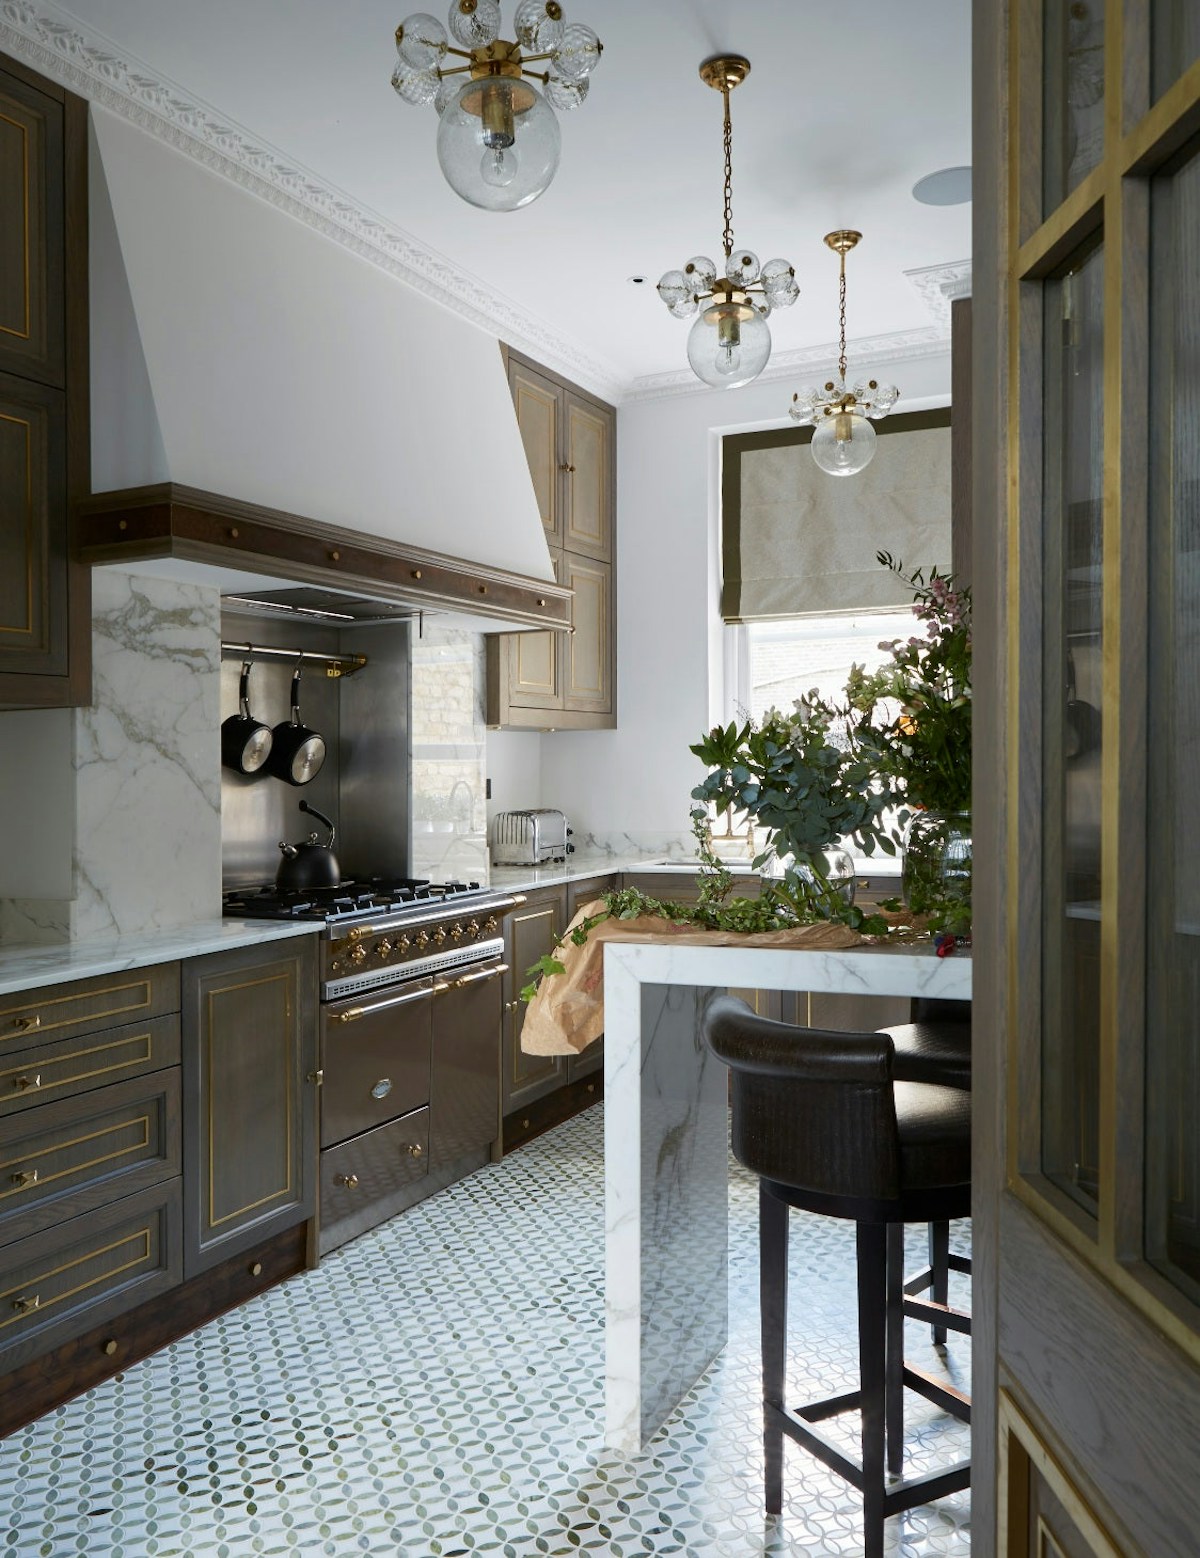 Amazing Kitchen Design Ideas – Interior Desires - LuxDeco.com Style Guide